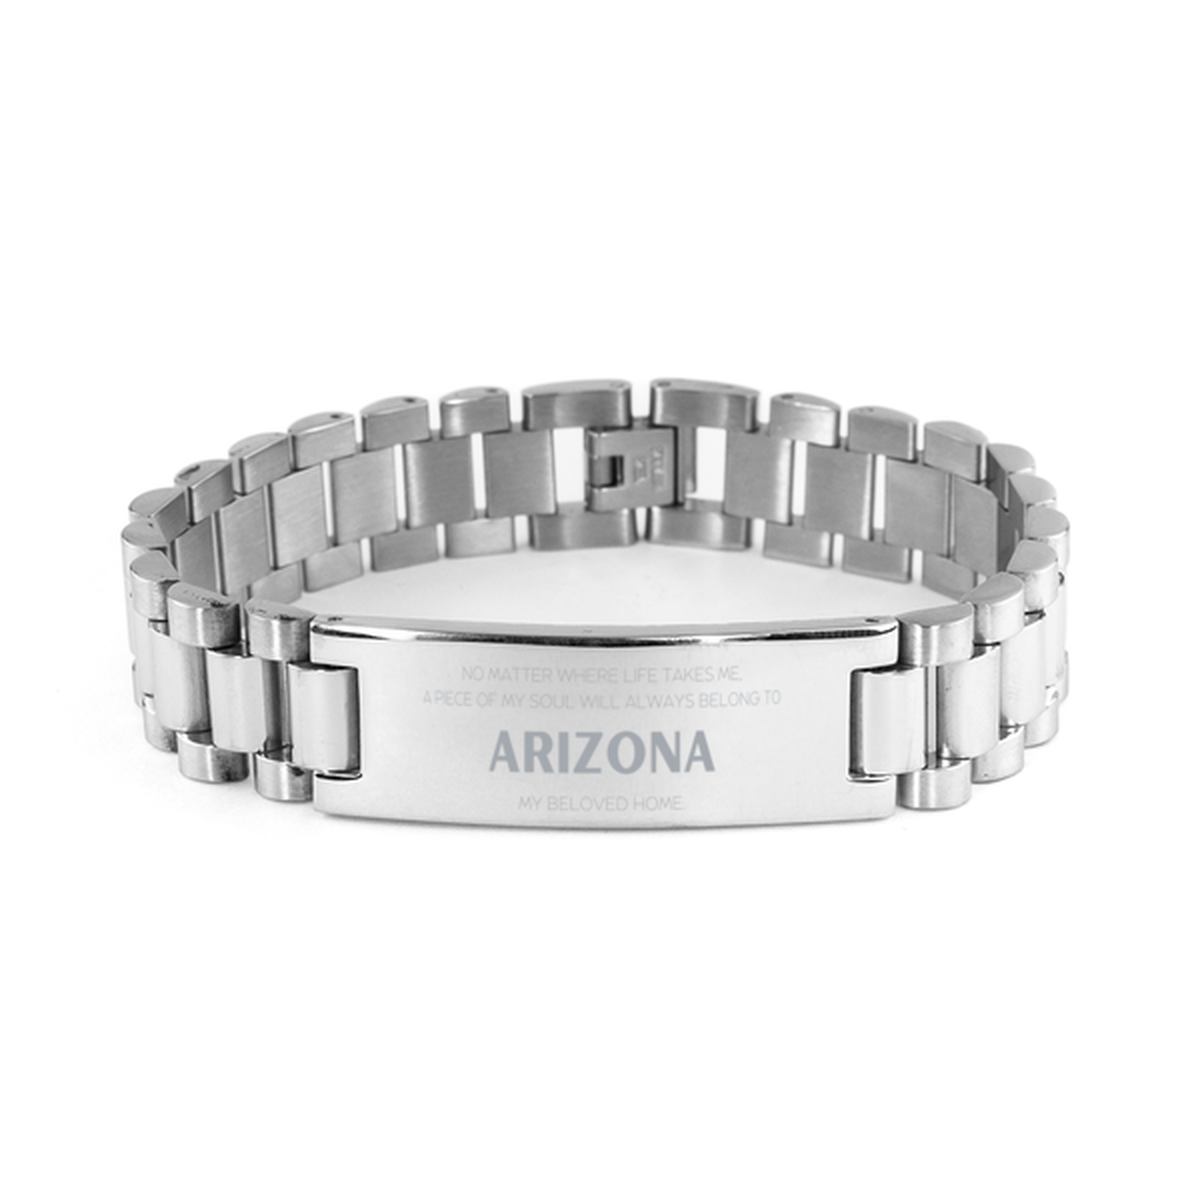 Love Arizona State Gifts, My soul will always belong to Arizona, Proud Ladder Stainless Steel Bracelet, Birthday Unique Gifts For Arizona Men, Women, Friends